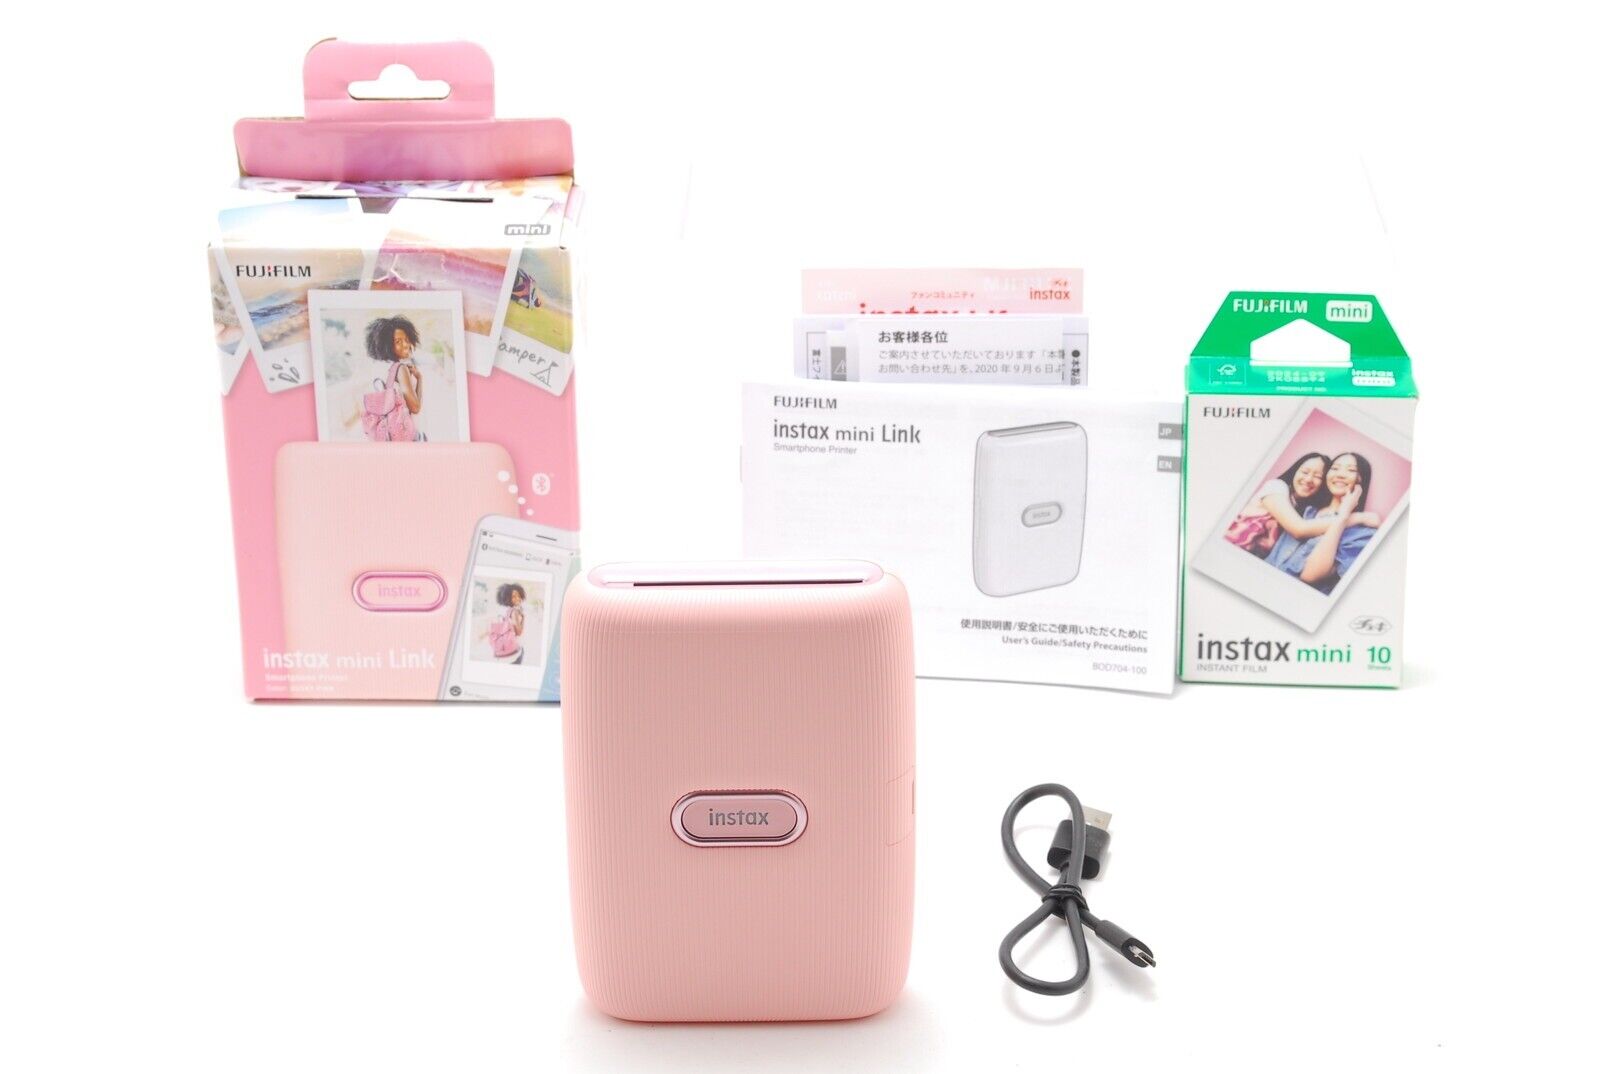 【Top Mint】Fujifilm instax mini link smartphone printer Dusky Pink JAPAN